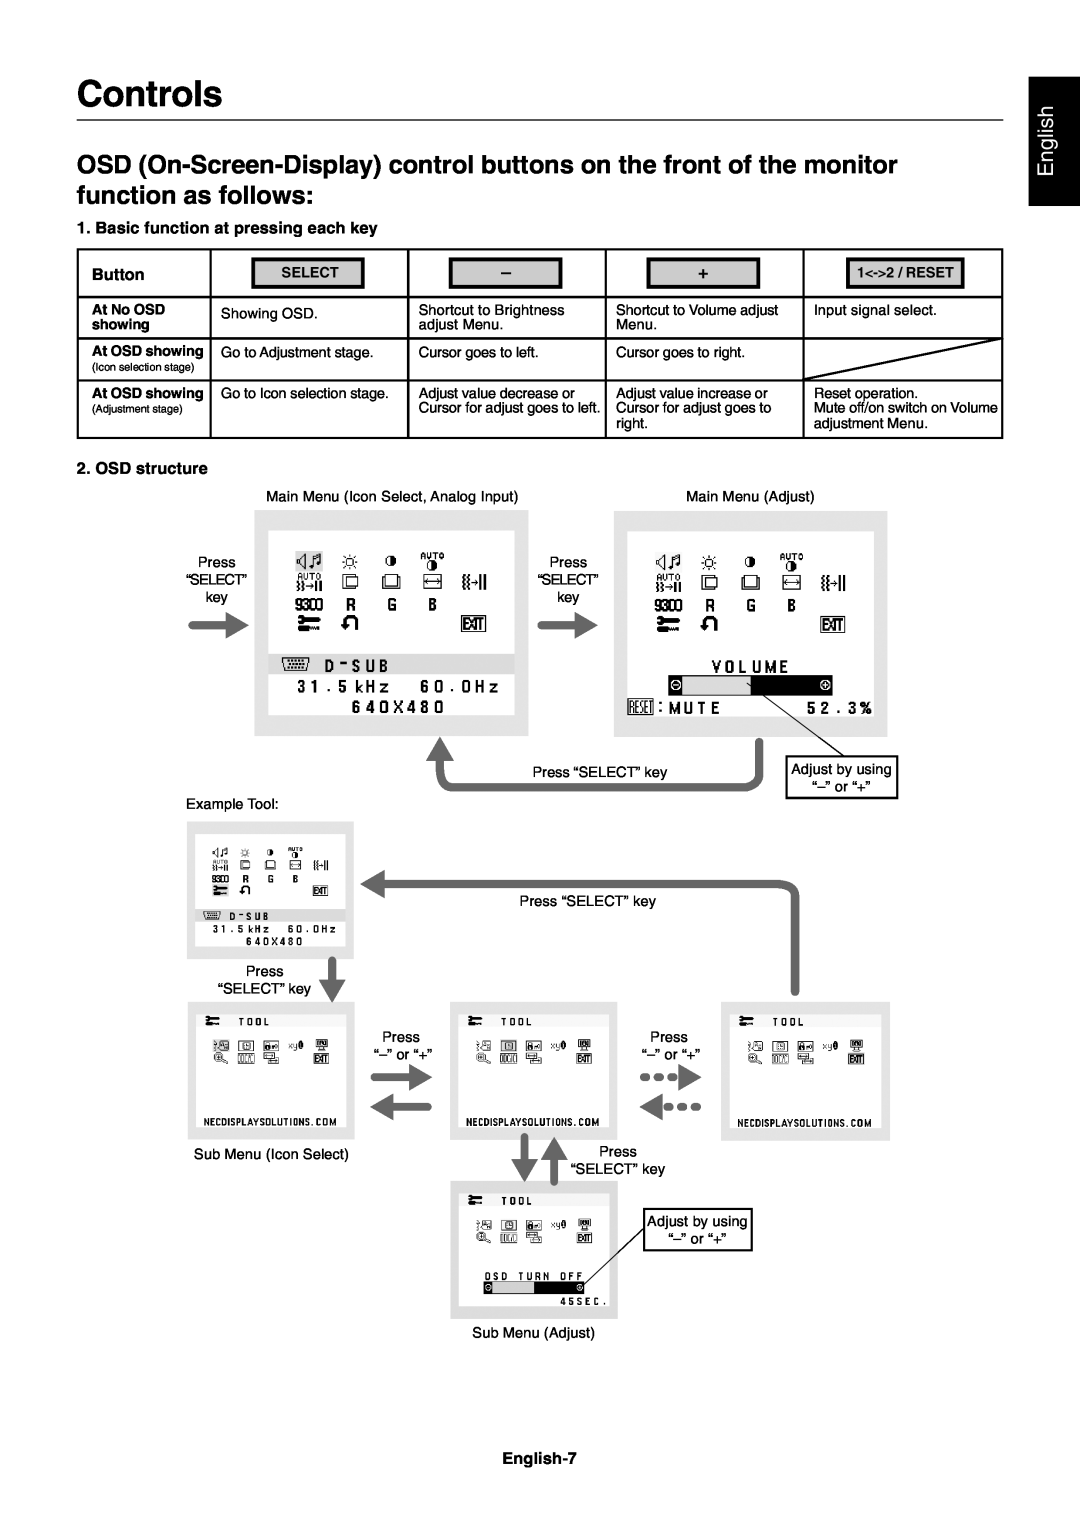 NEC LCD205WNXM, LCD225WNXM user manual Controls, English, Select, 1 - 2 /RESET, At No OSD, showing 